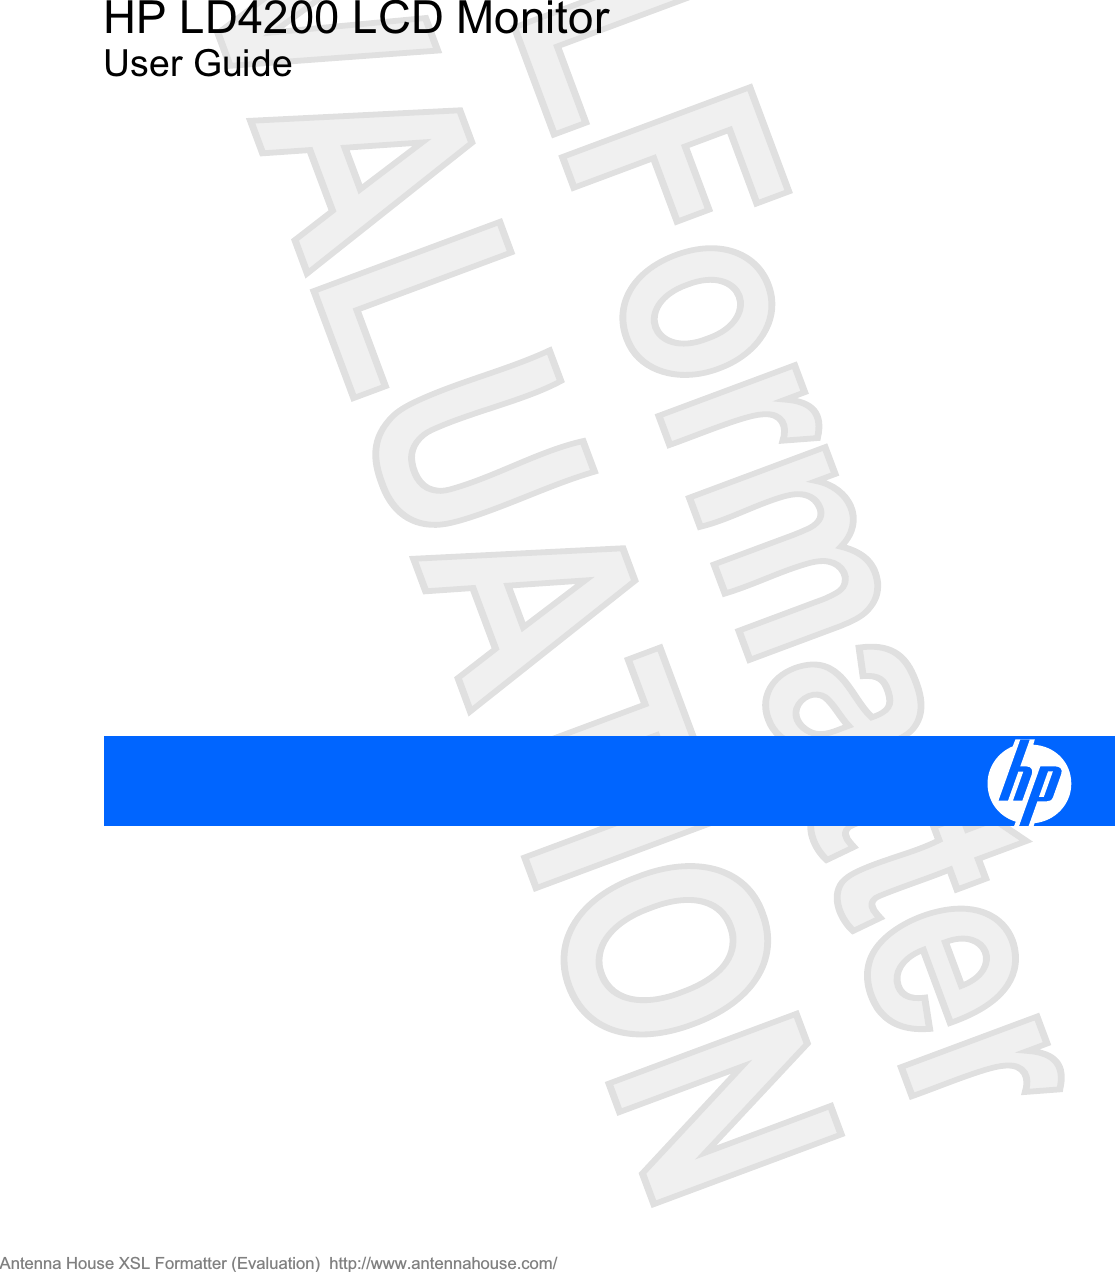 HP LD4200 LCD MonitorUser GuideAntenna House XSL Formatter (Evaluation)  http://www.antennahouse.com/